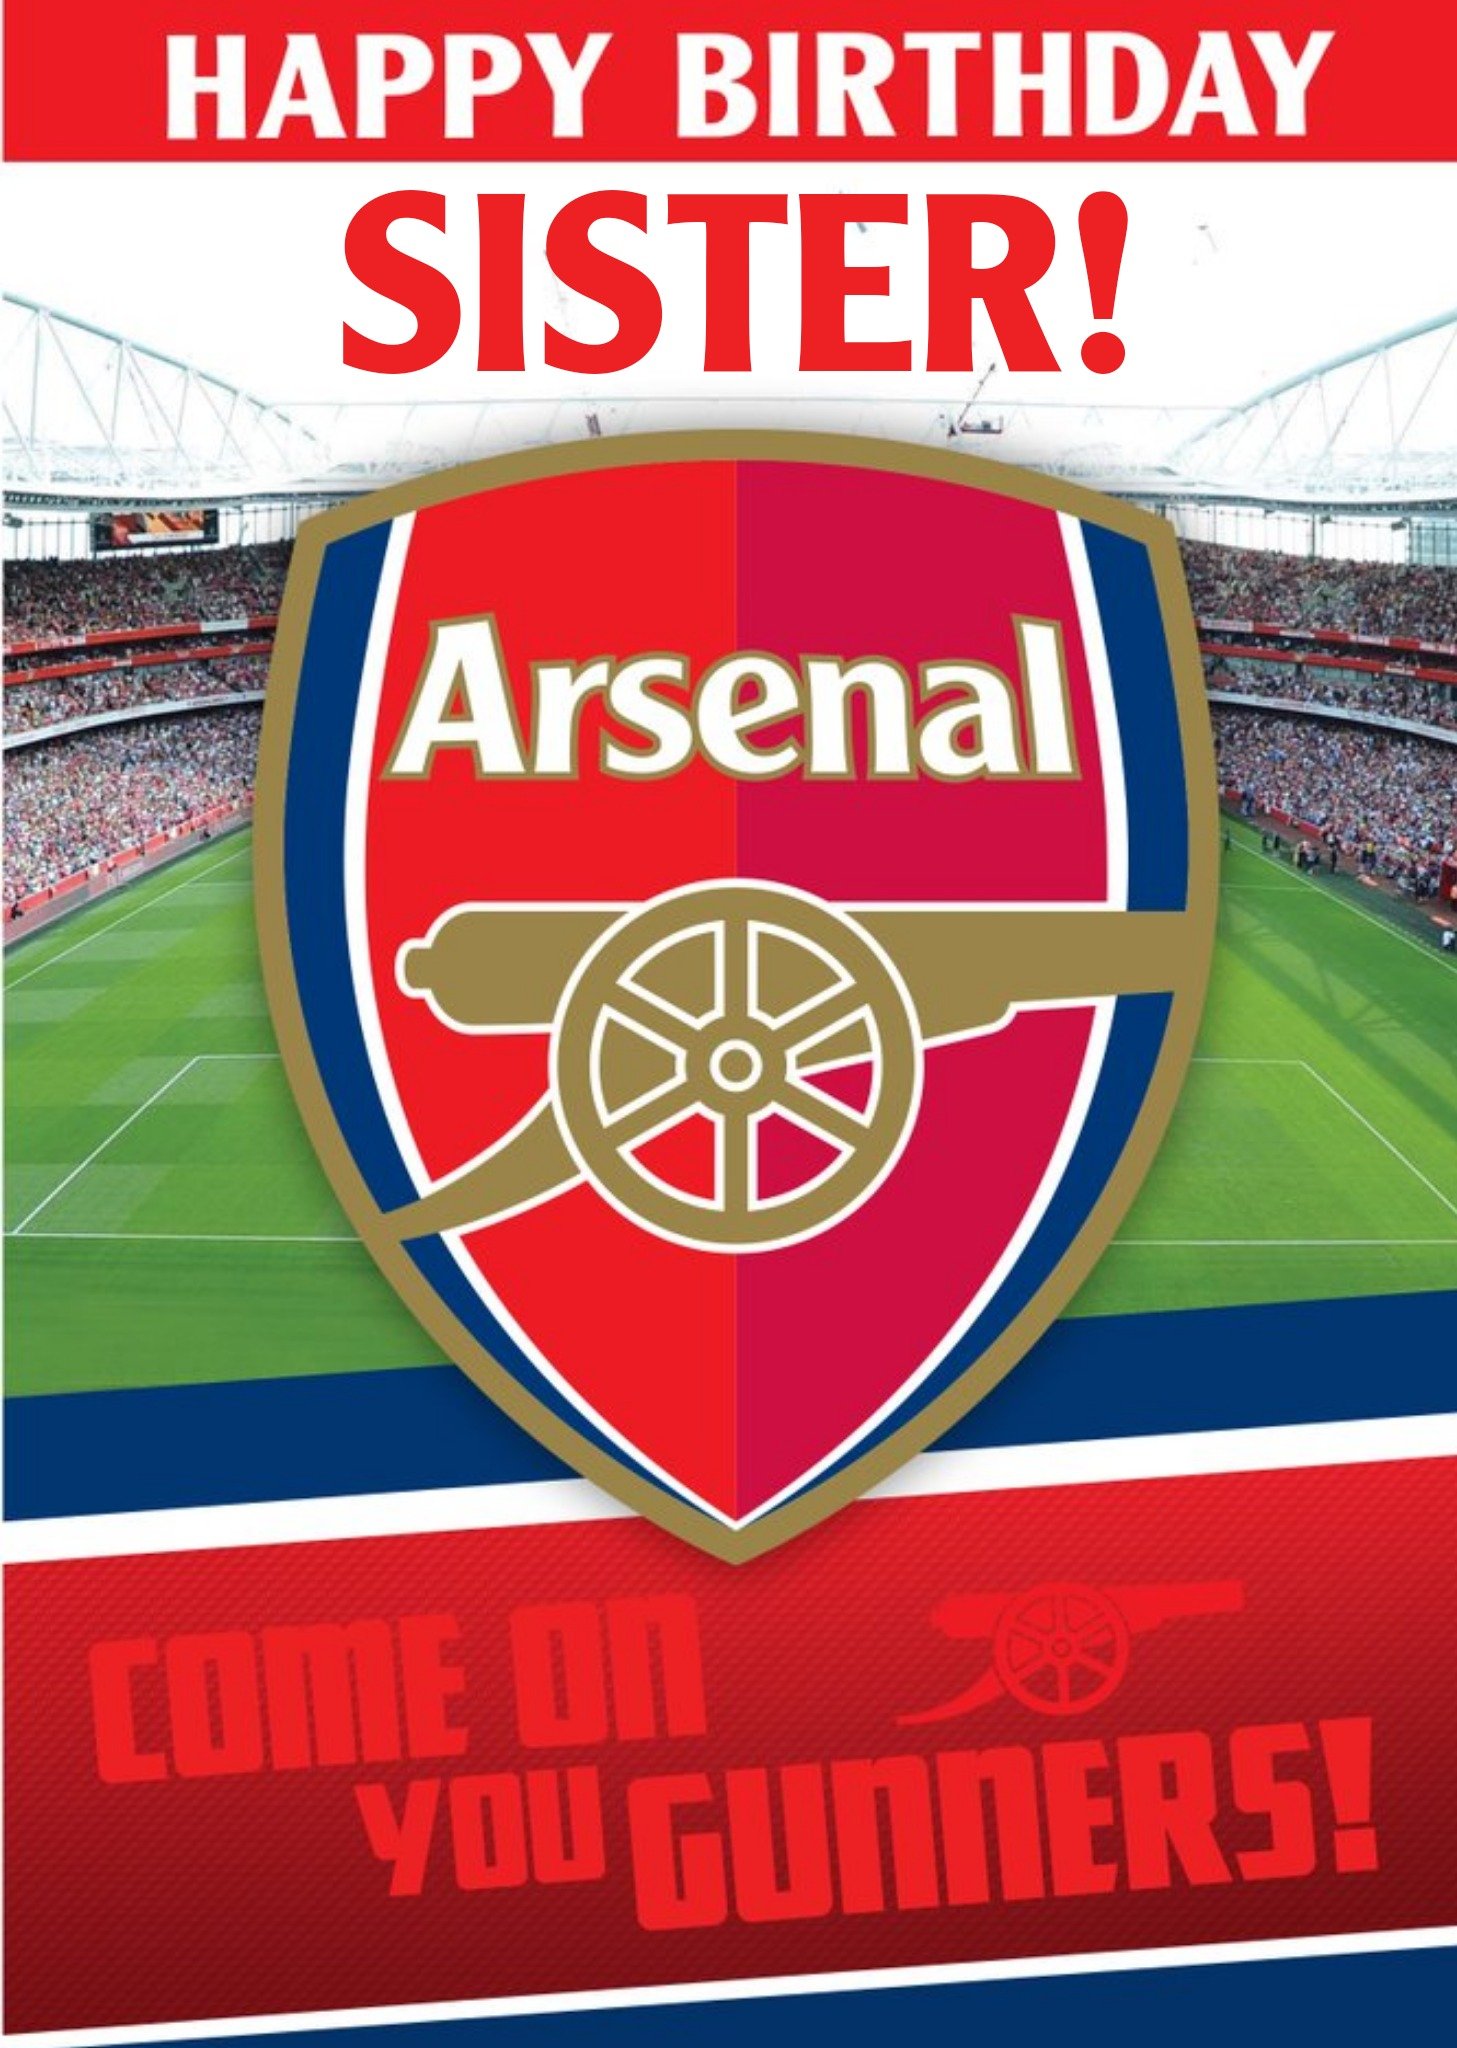 Arsenal Football Stadium Come On You Gunners Sister Happy Birthday Card Ecard